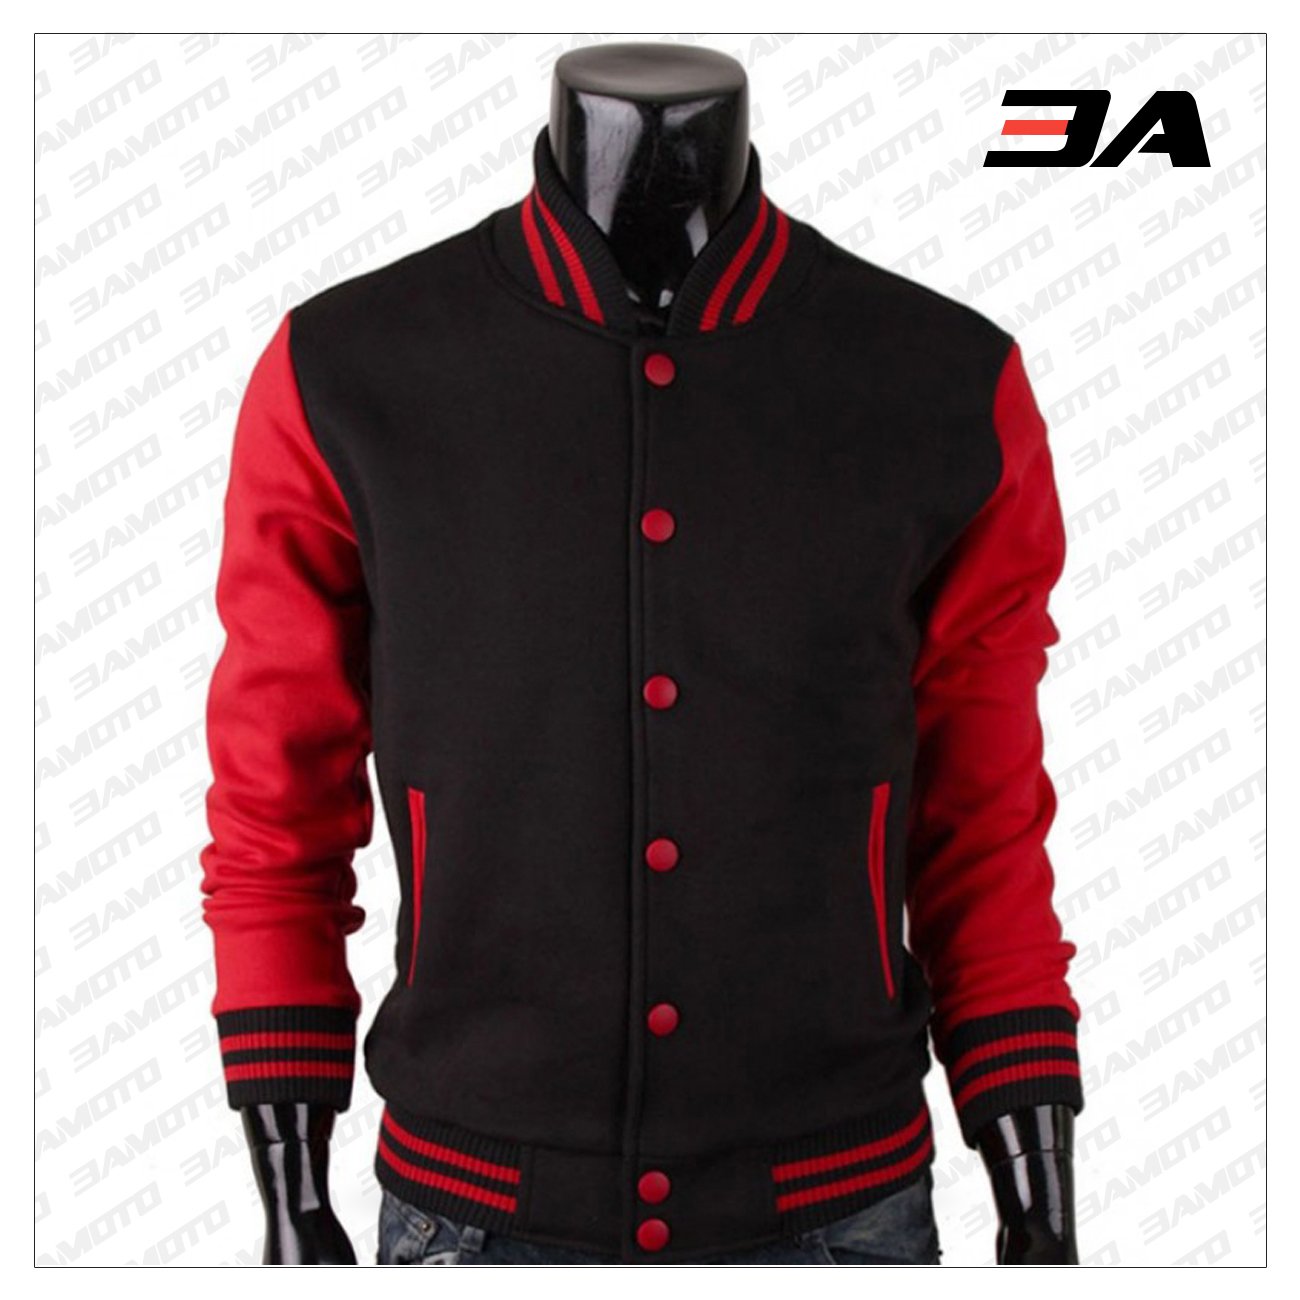 varsity jacket red and black